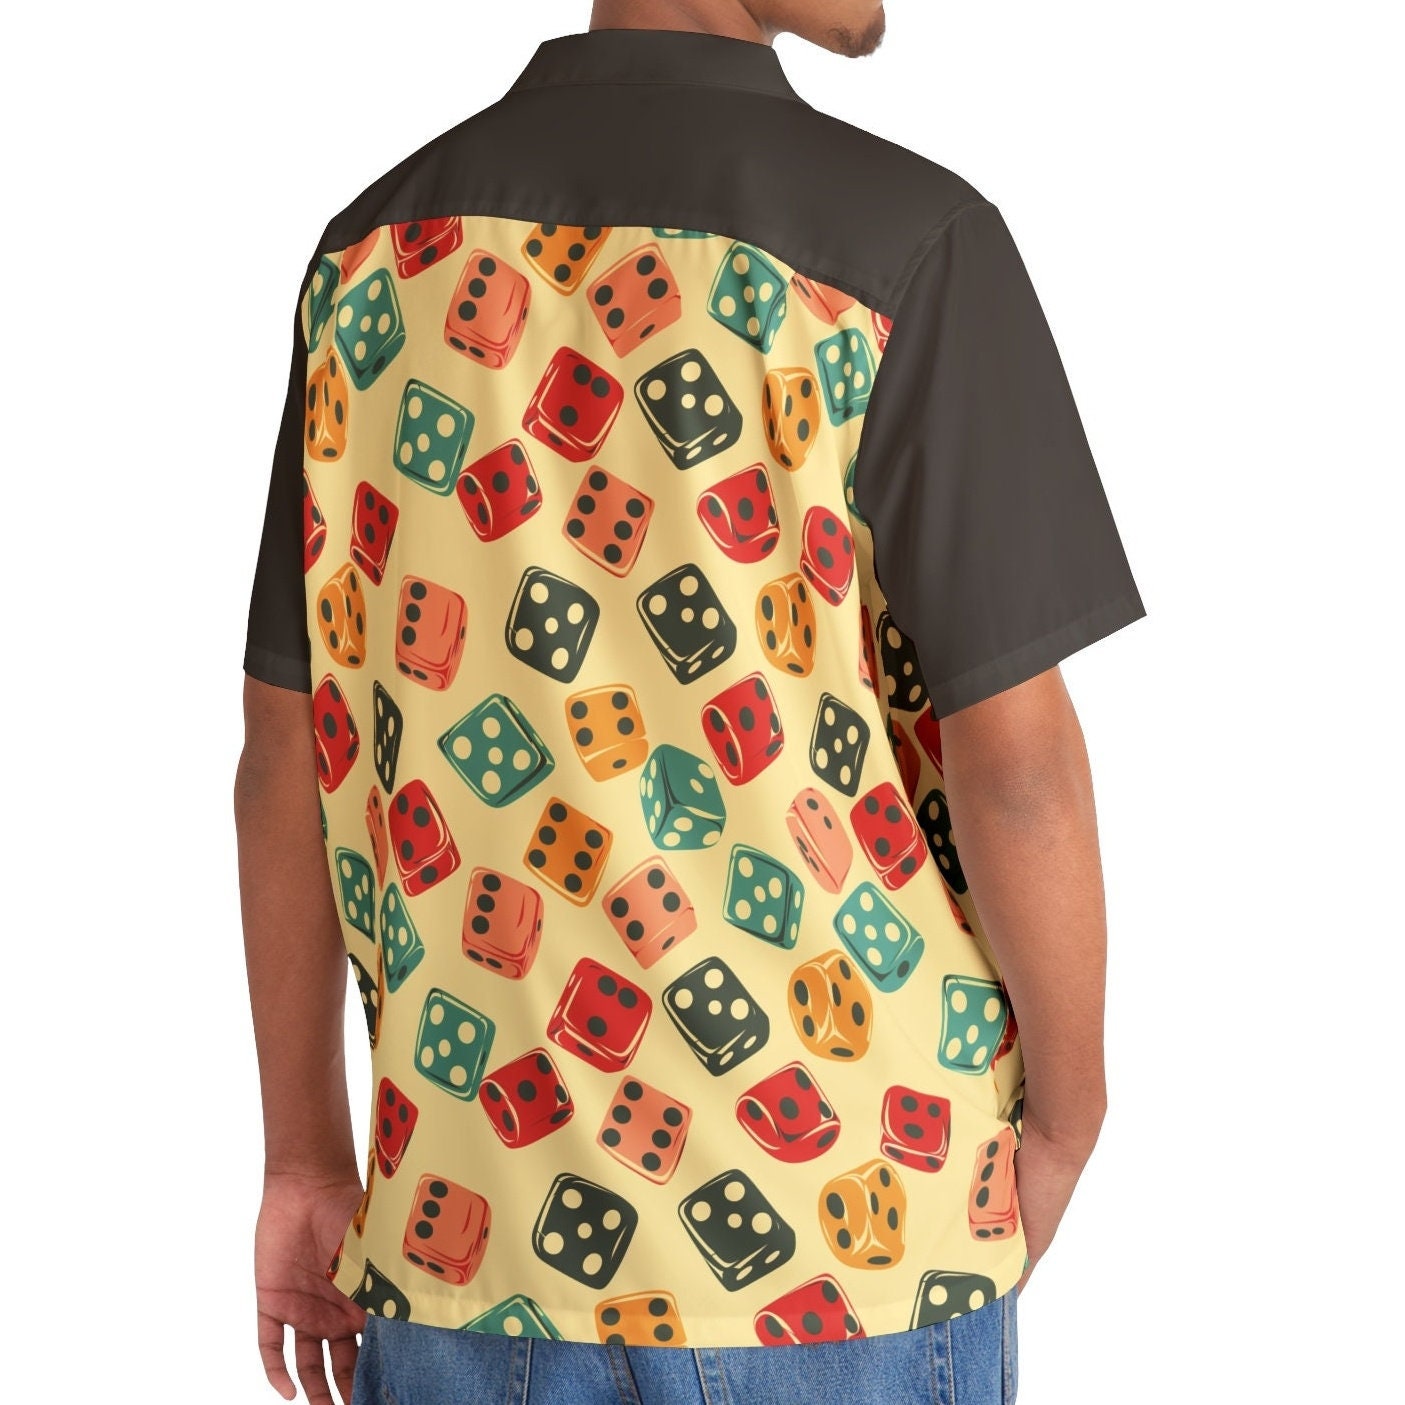 Dice Retro Vintage-inspired Hawaiian Shirt, 1950s/60s style